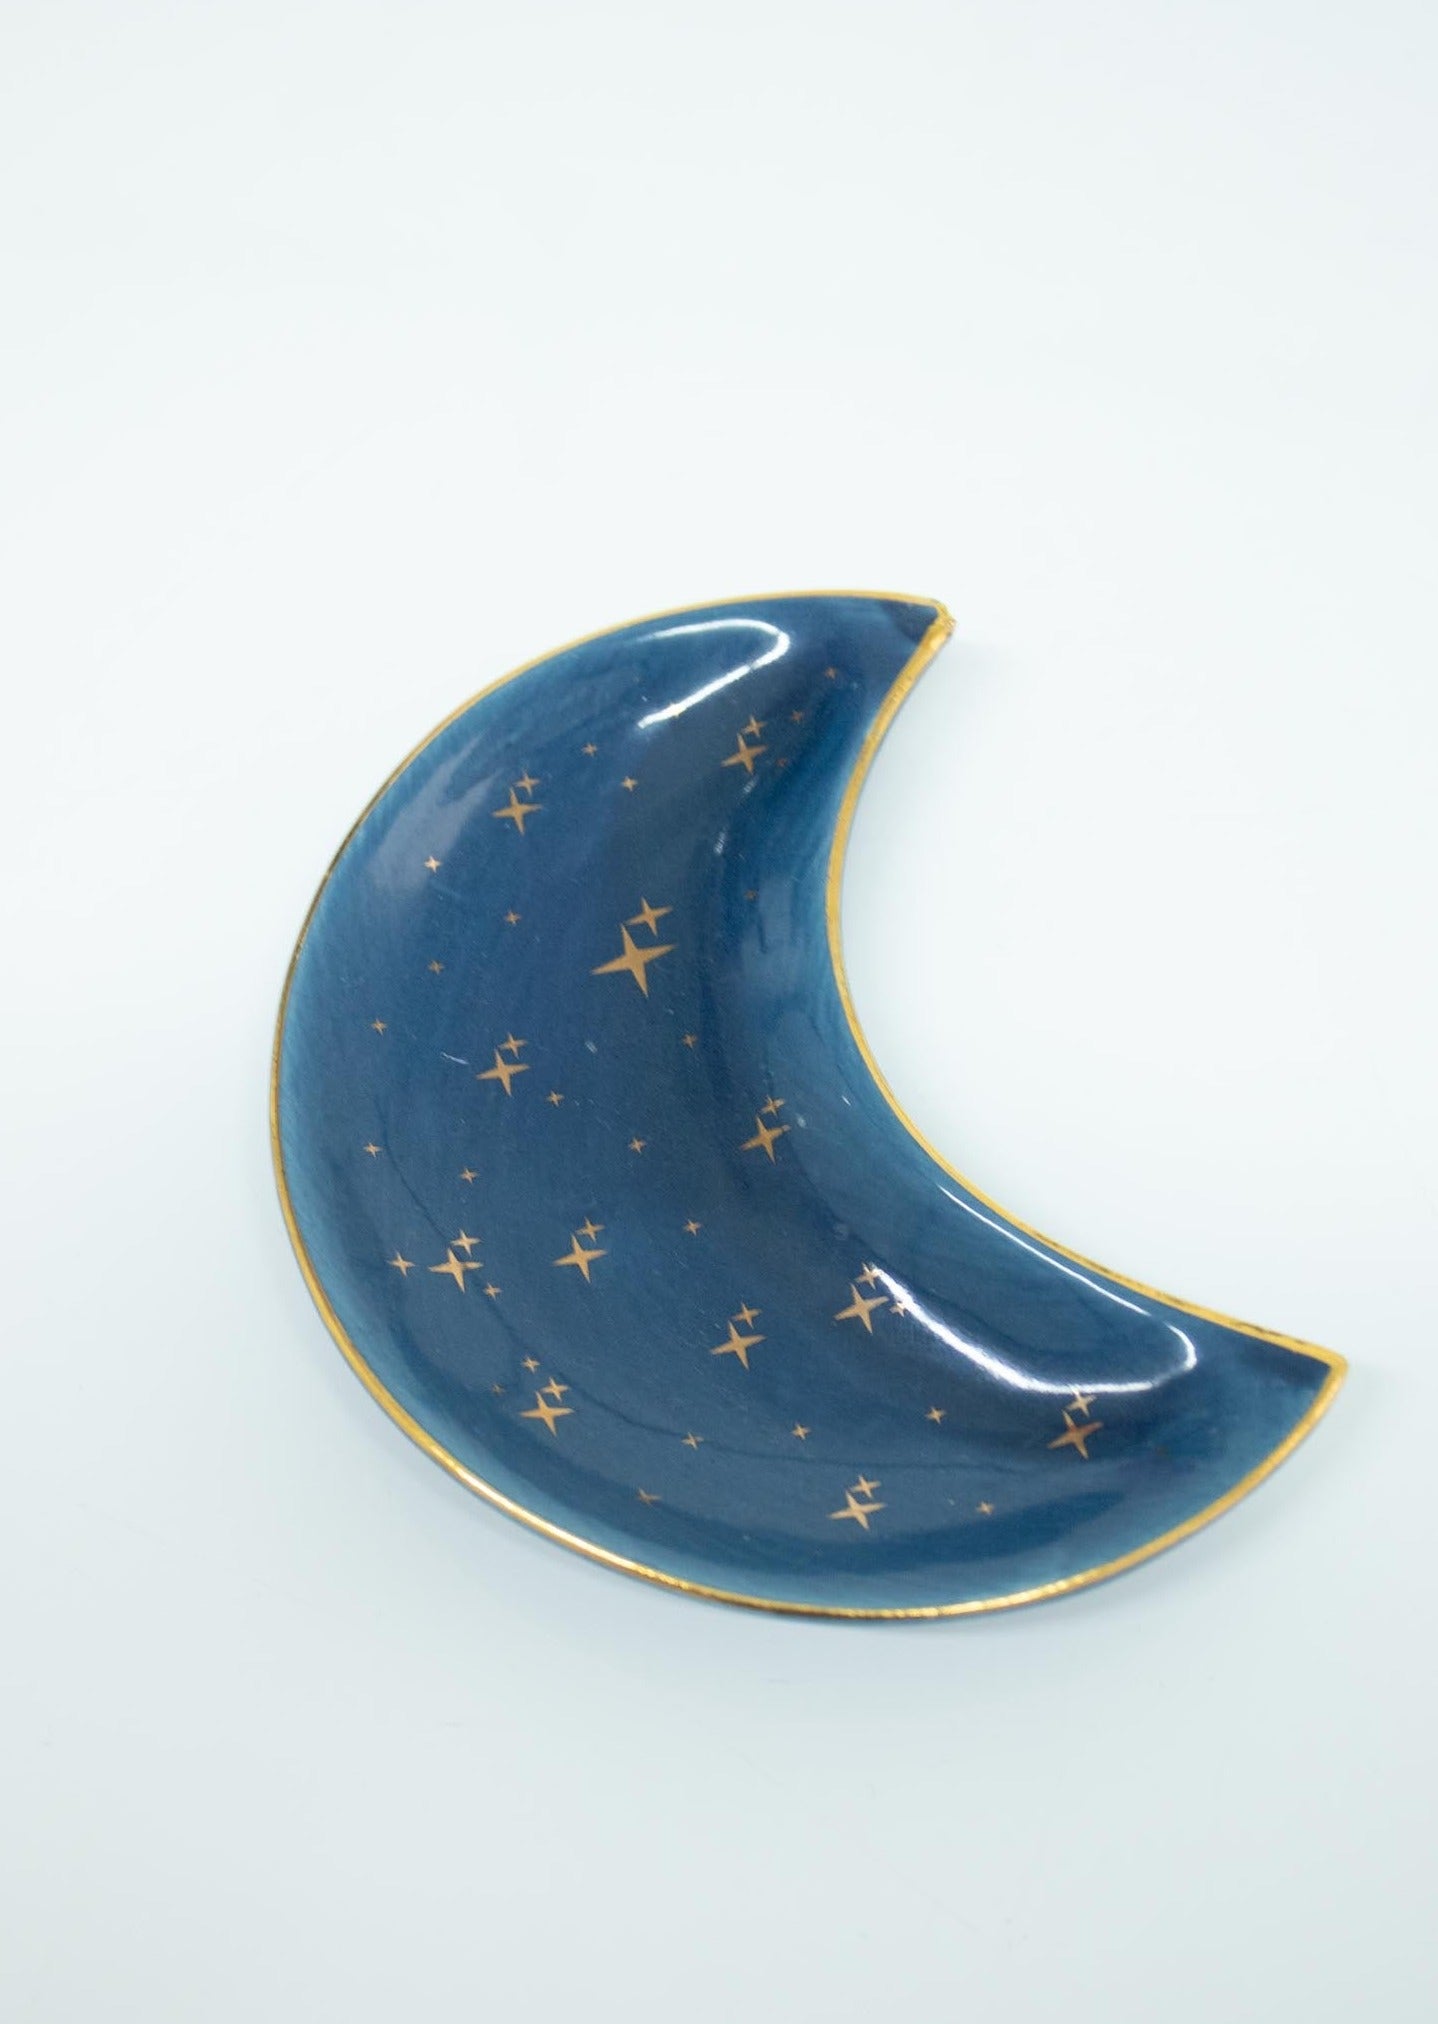 moon trinket dish blue